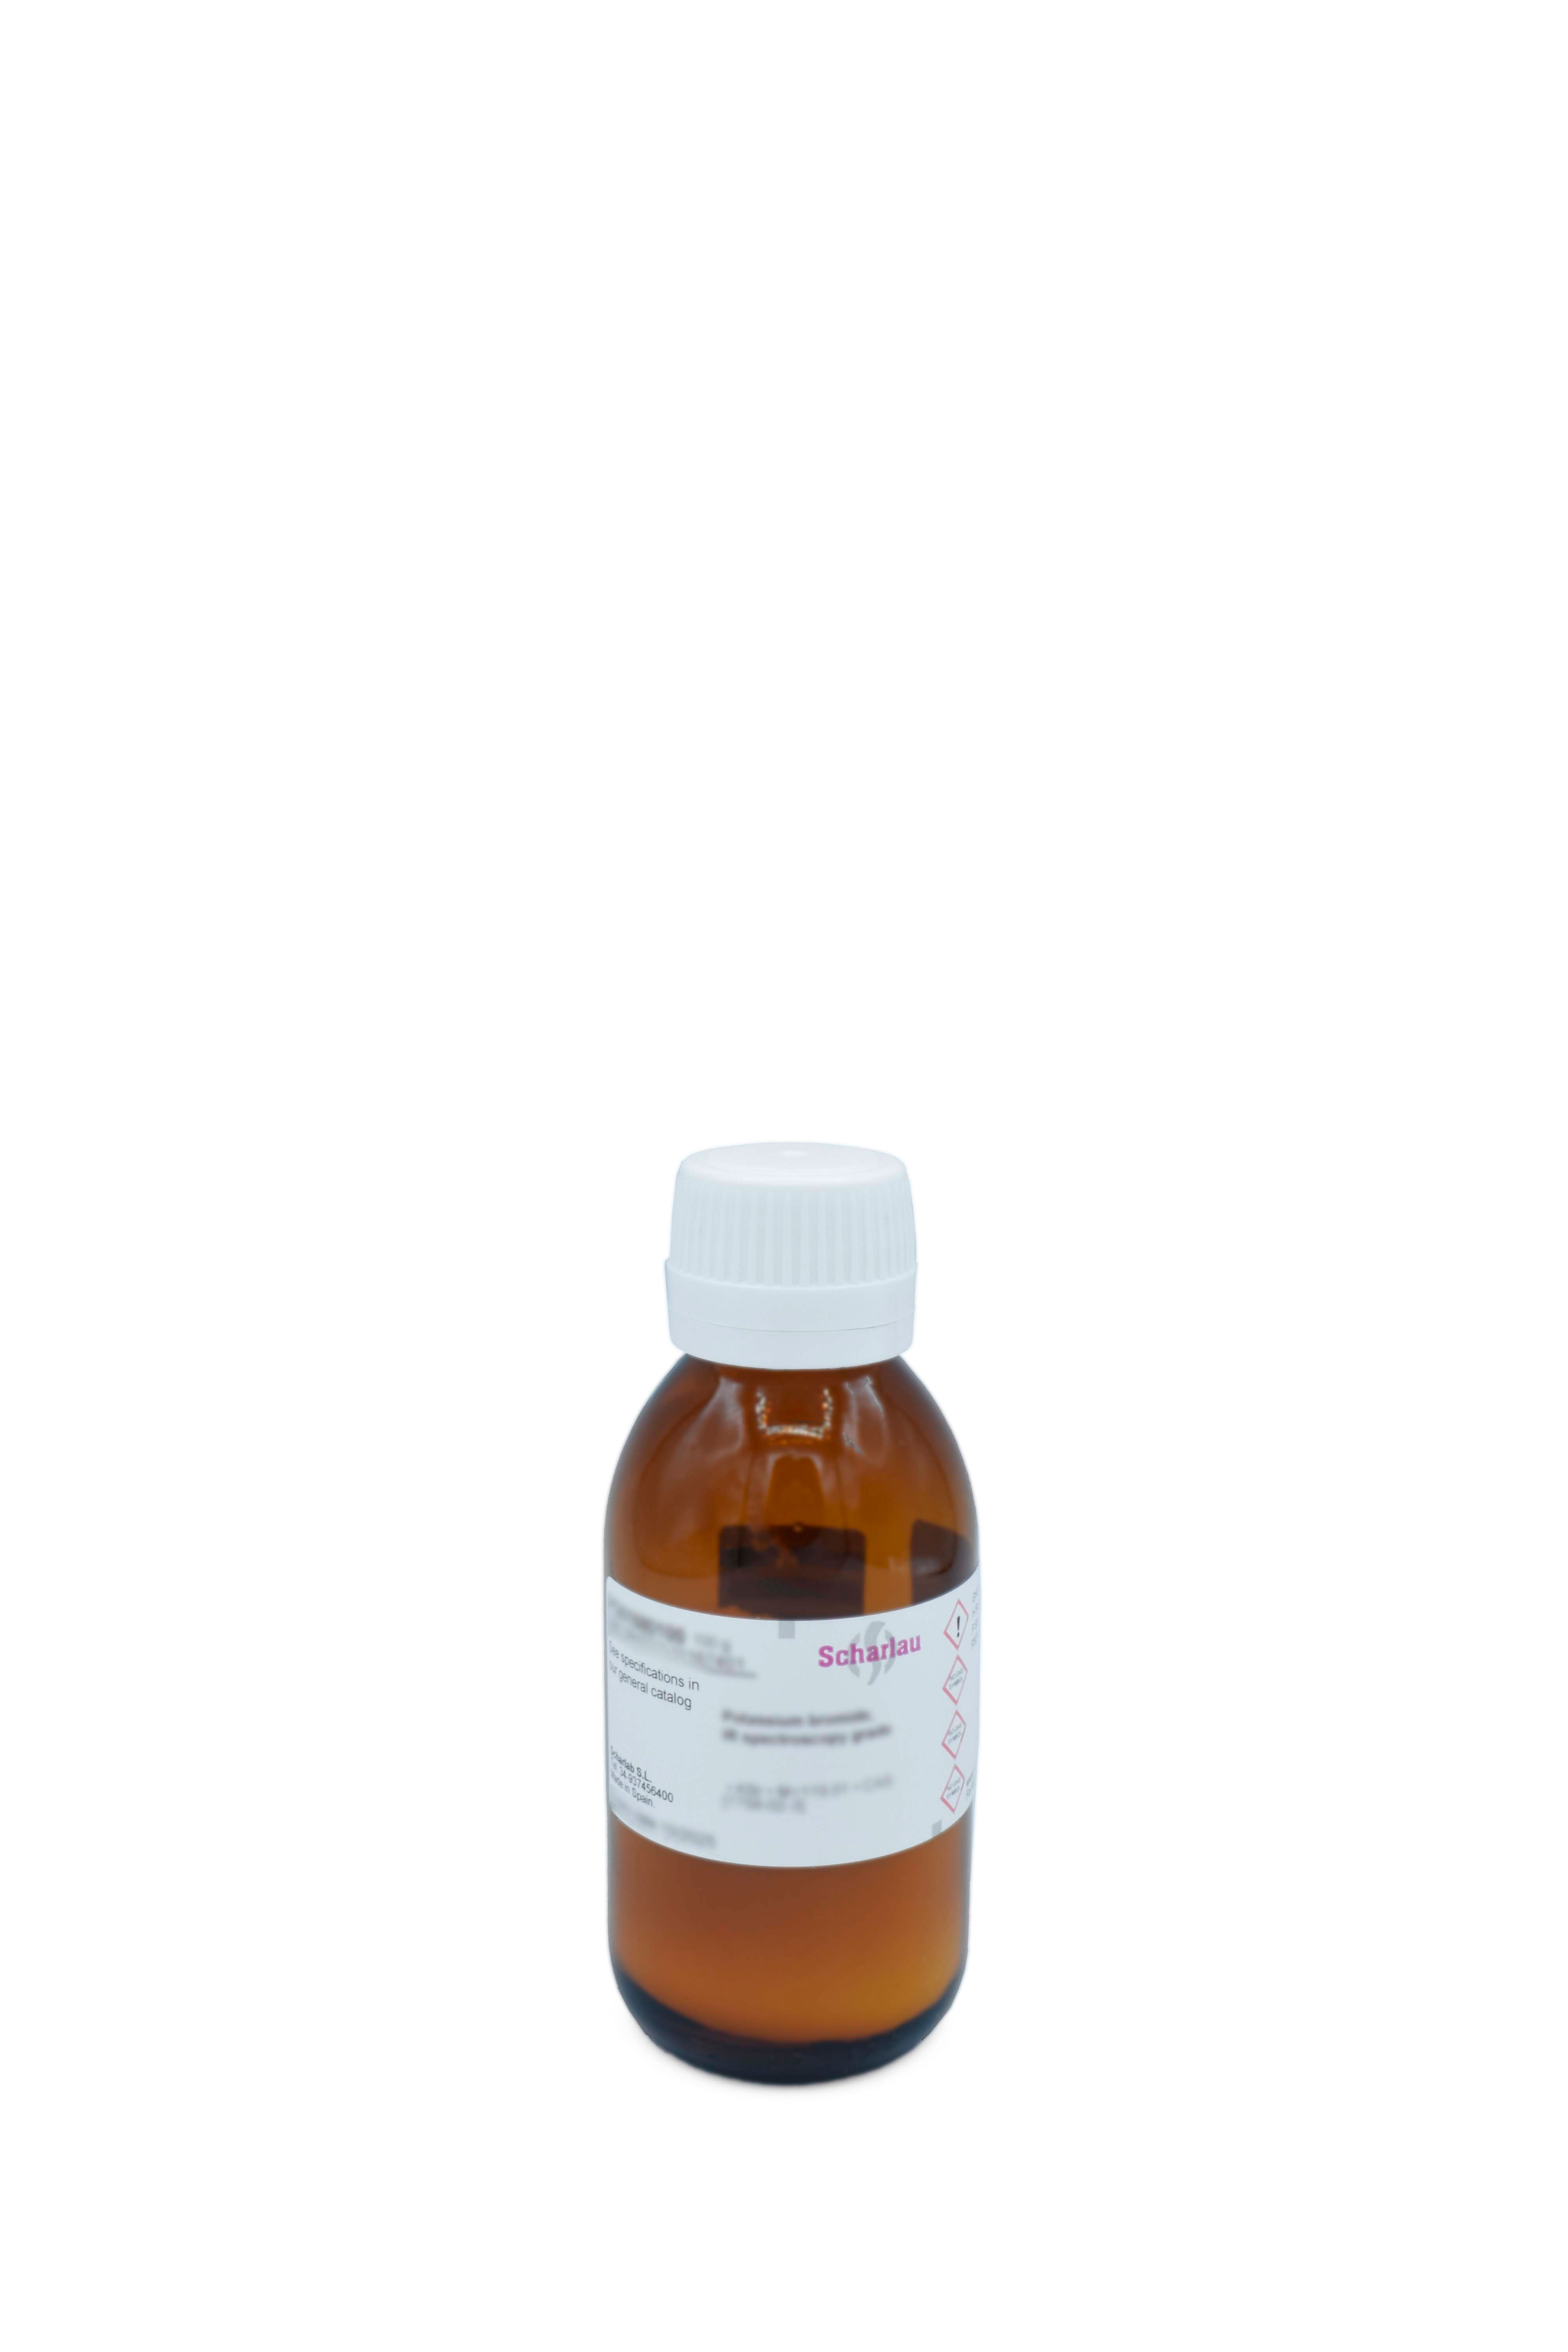 L-Histidine hydrochloride monohydrate, Pharmpur®, Ph Eur, BP